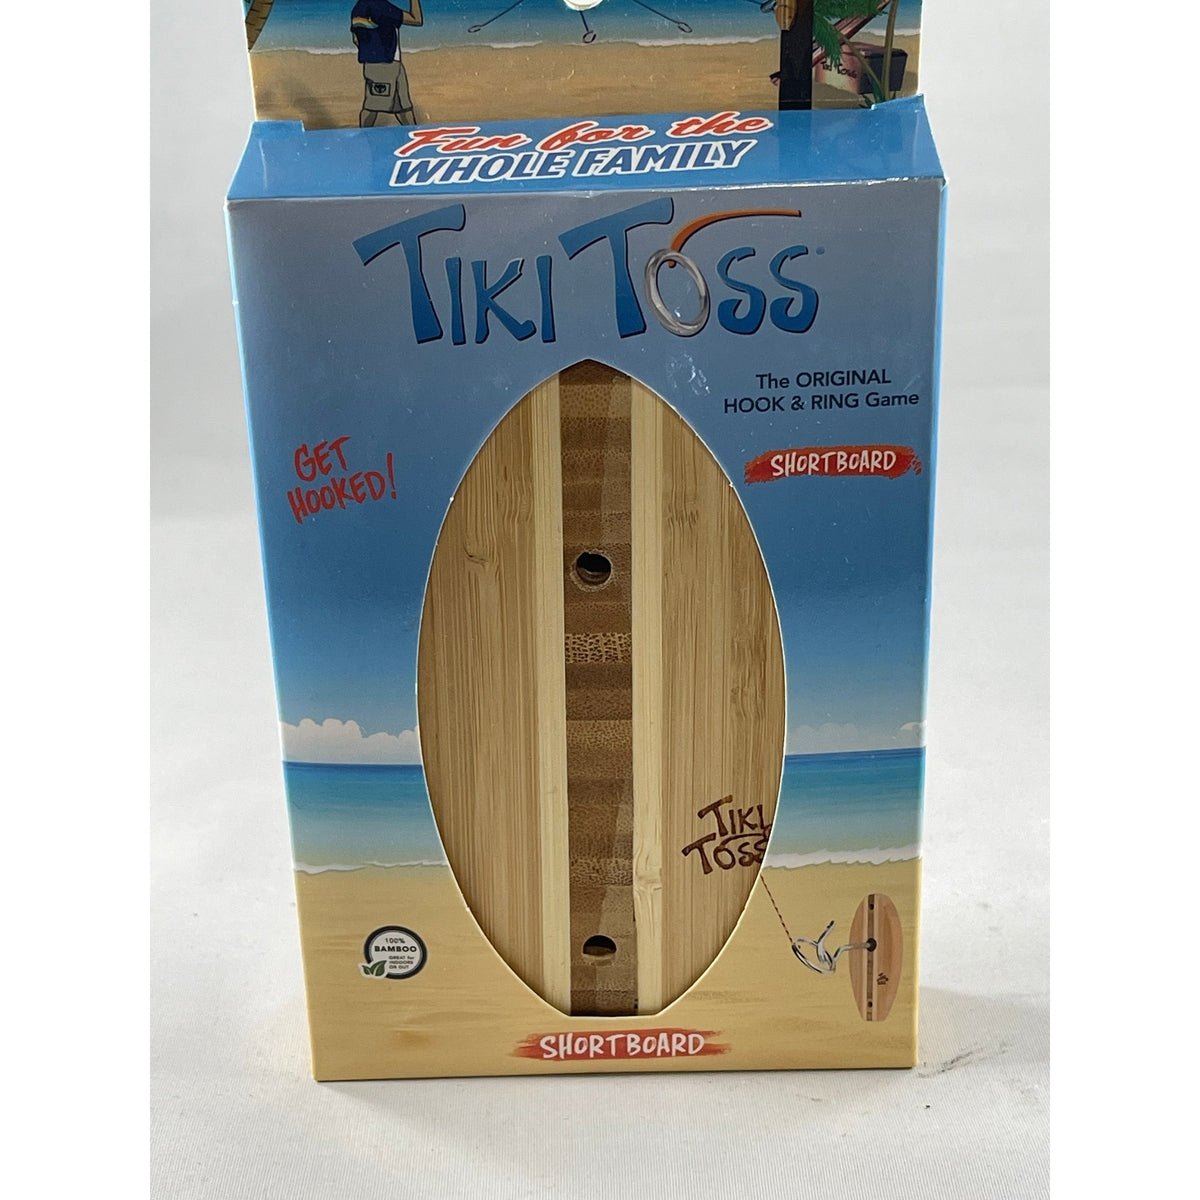 Tiki Toss Qualifies for Free Shipping Tiki Toss Shortboard Hook & Ring Toss Game #SHORTBOARD